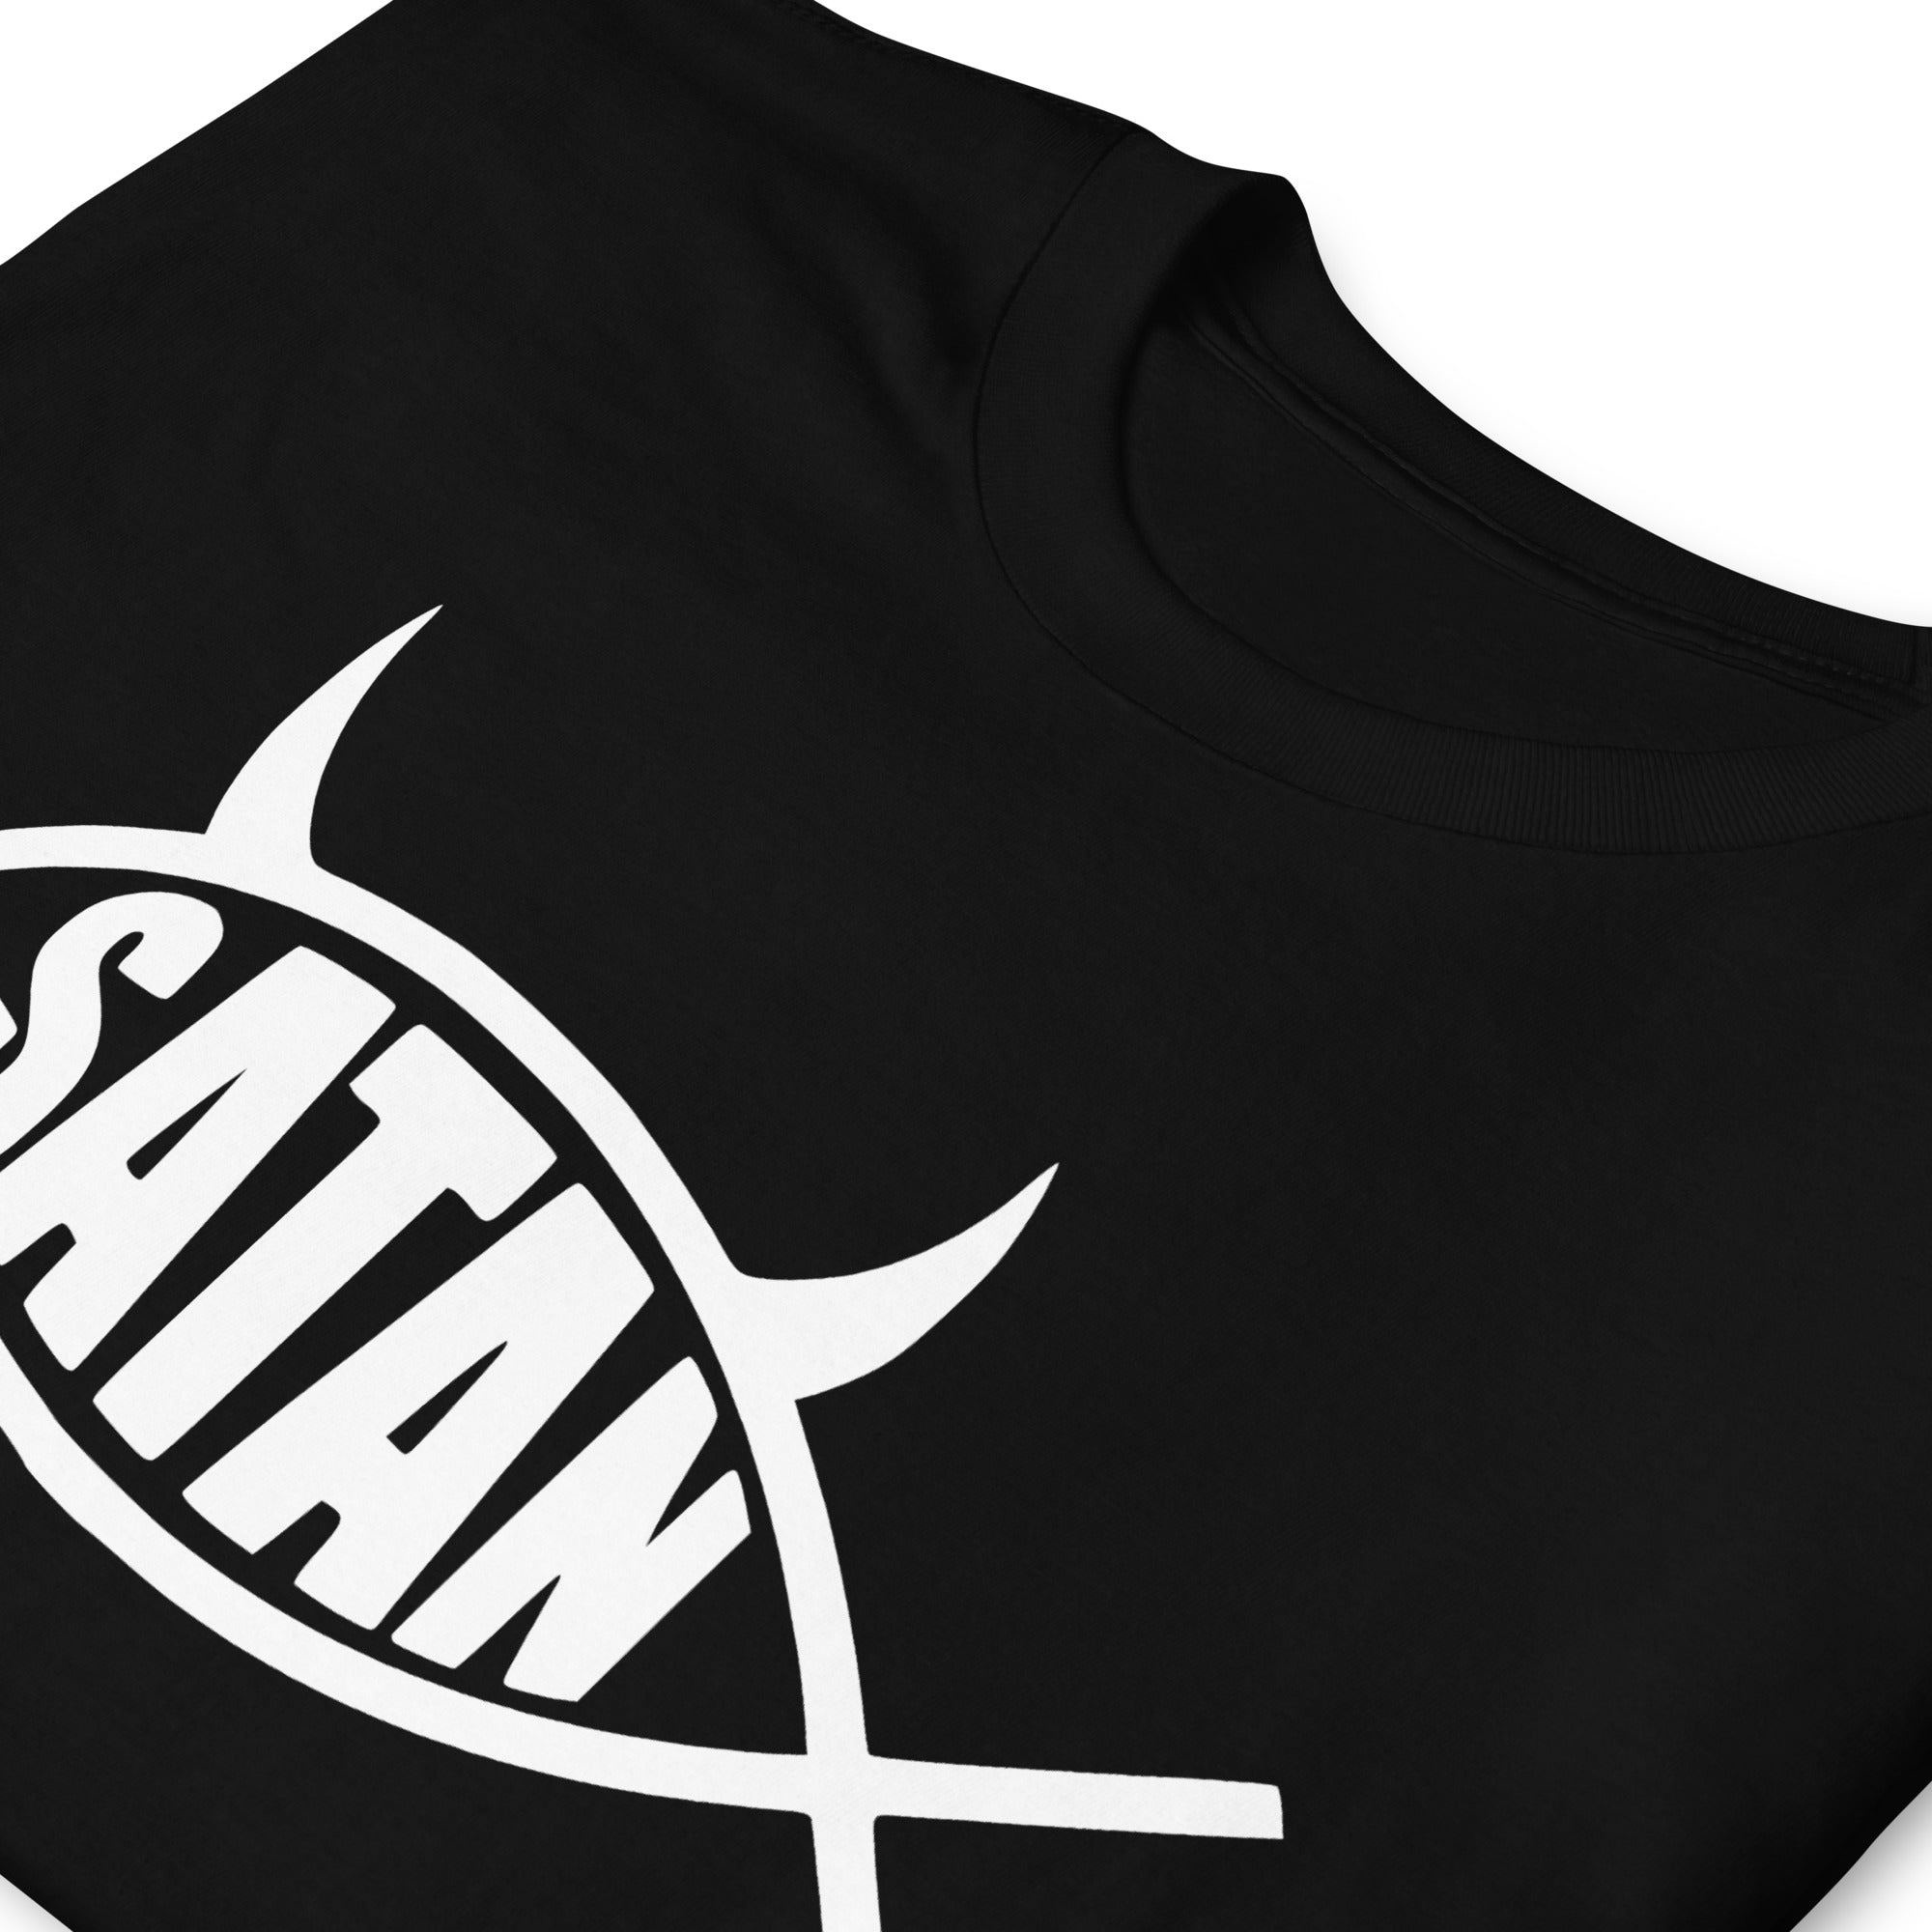 White Ichthys Satan Fish with Horns Religious Satire Short-Sleeve T-Shirt